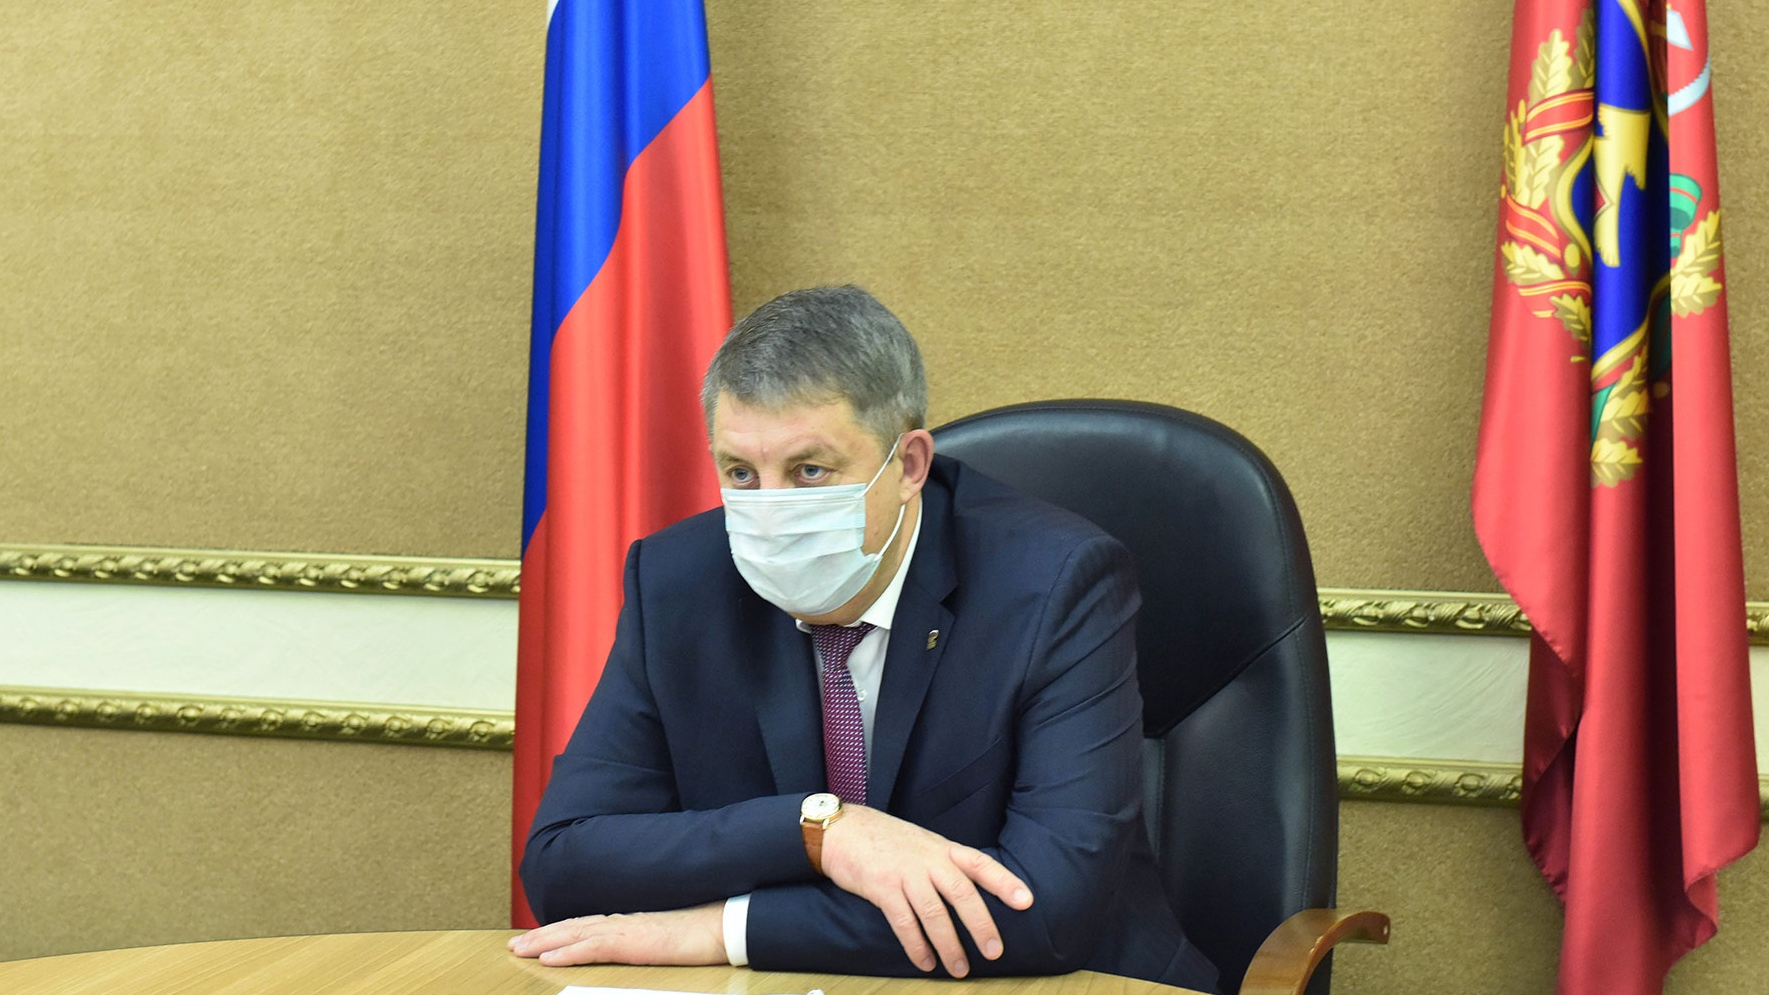 Губернатор Брянской области Александр Богомаз